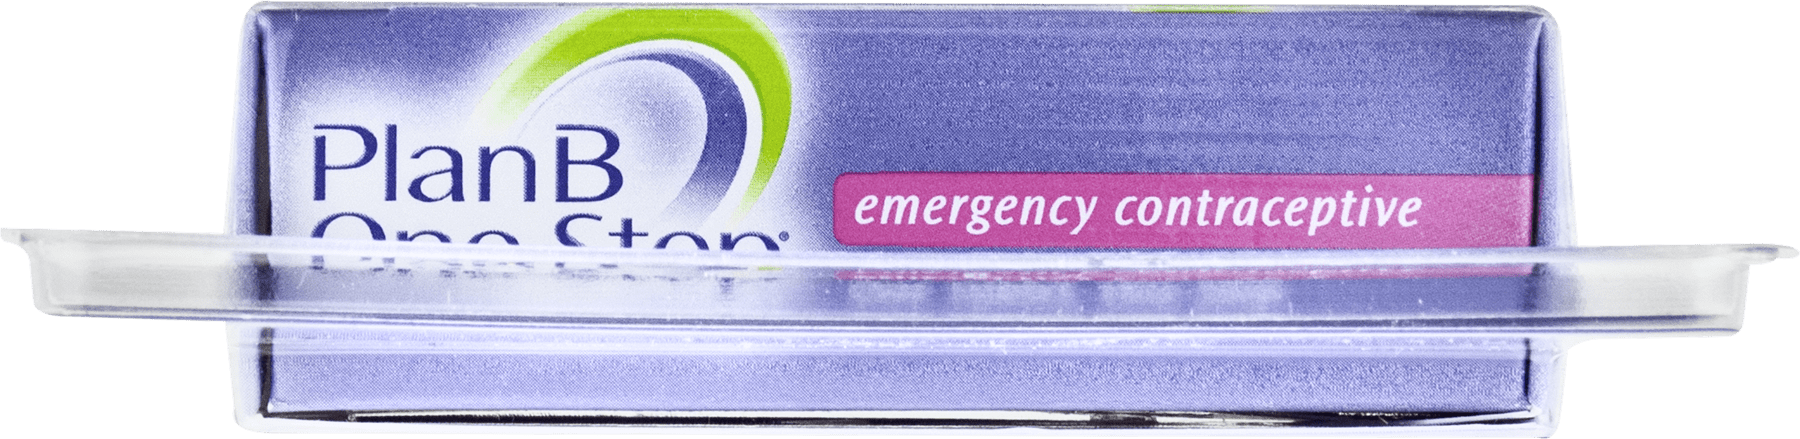 Plan B One-step Emergency Contraceptive 1 Tablet,1.5 mg - Walmart.com